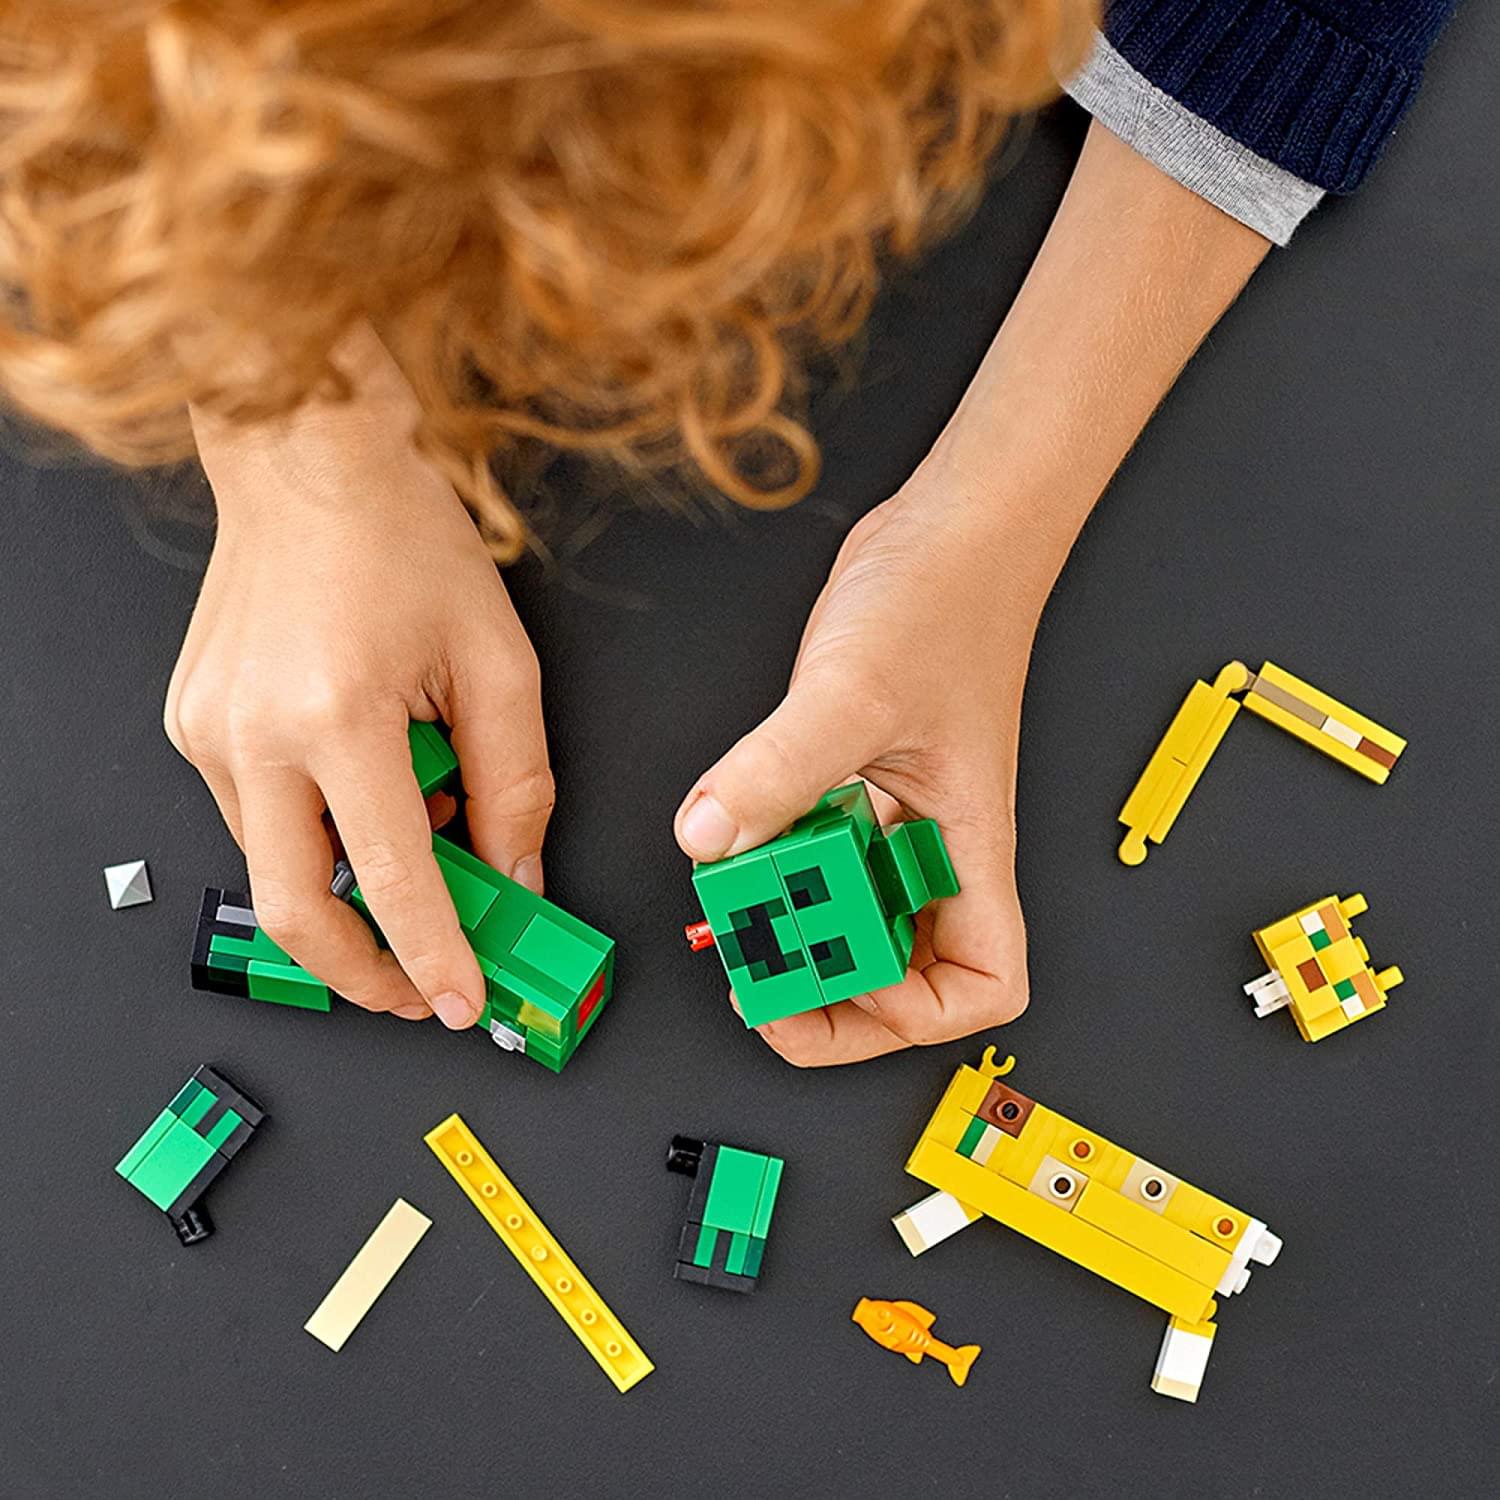 LEGO Minecraft Creeper BigFig & Ocelot 21156 | 184 Piece Building Figure Set